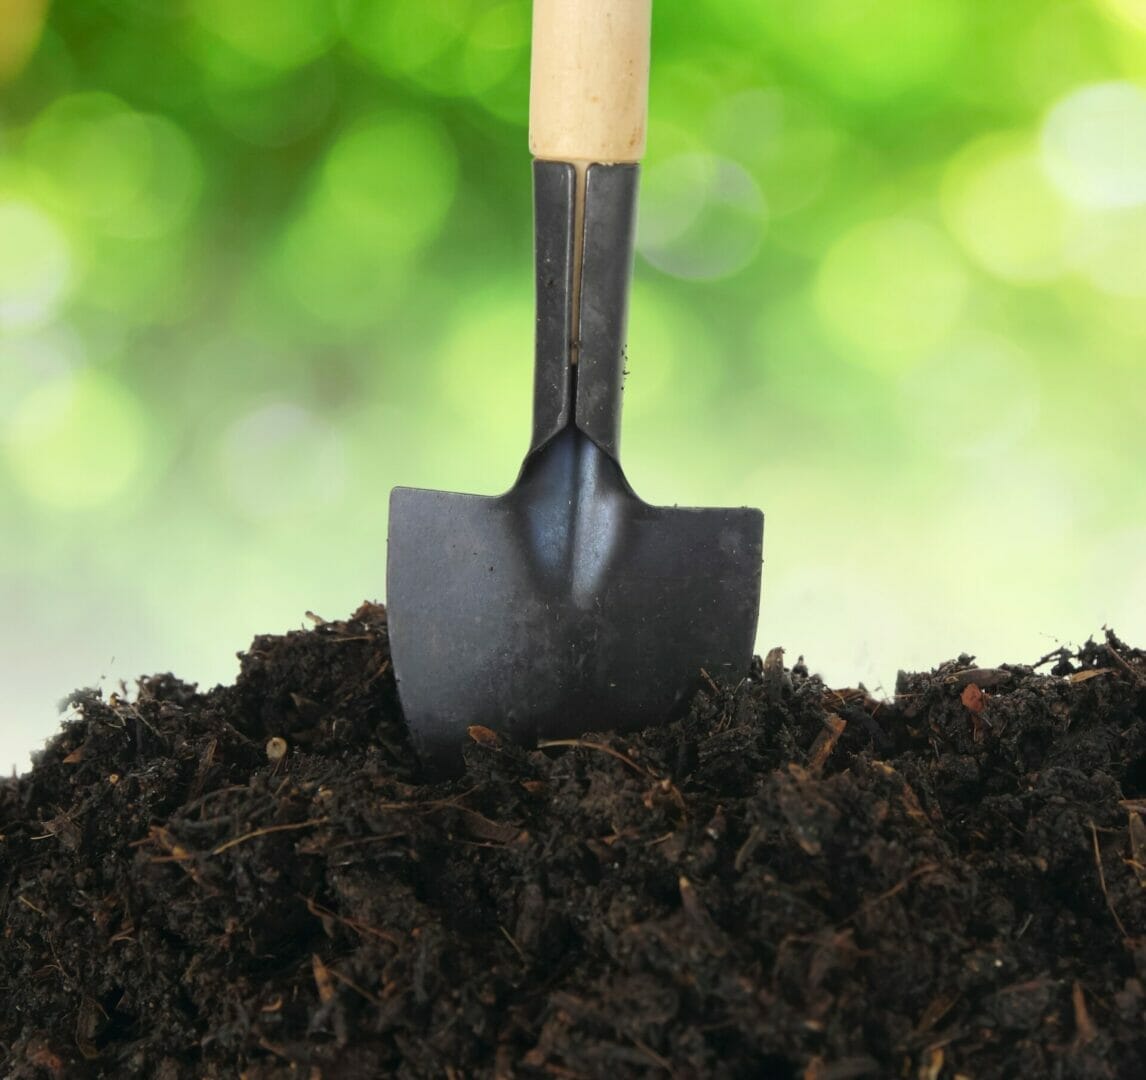 Soil with shovel and green bokeh